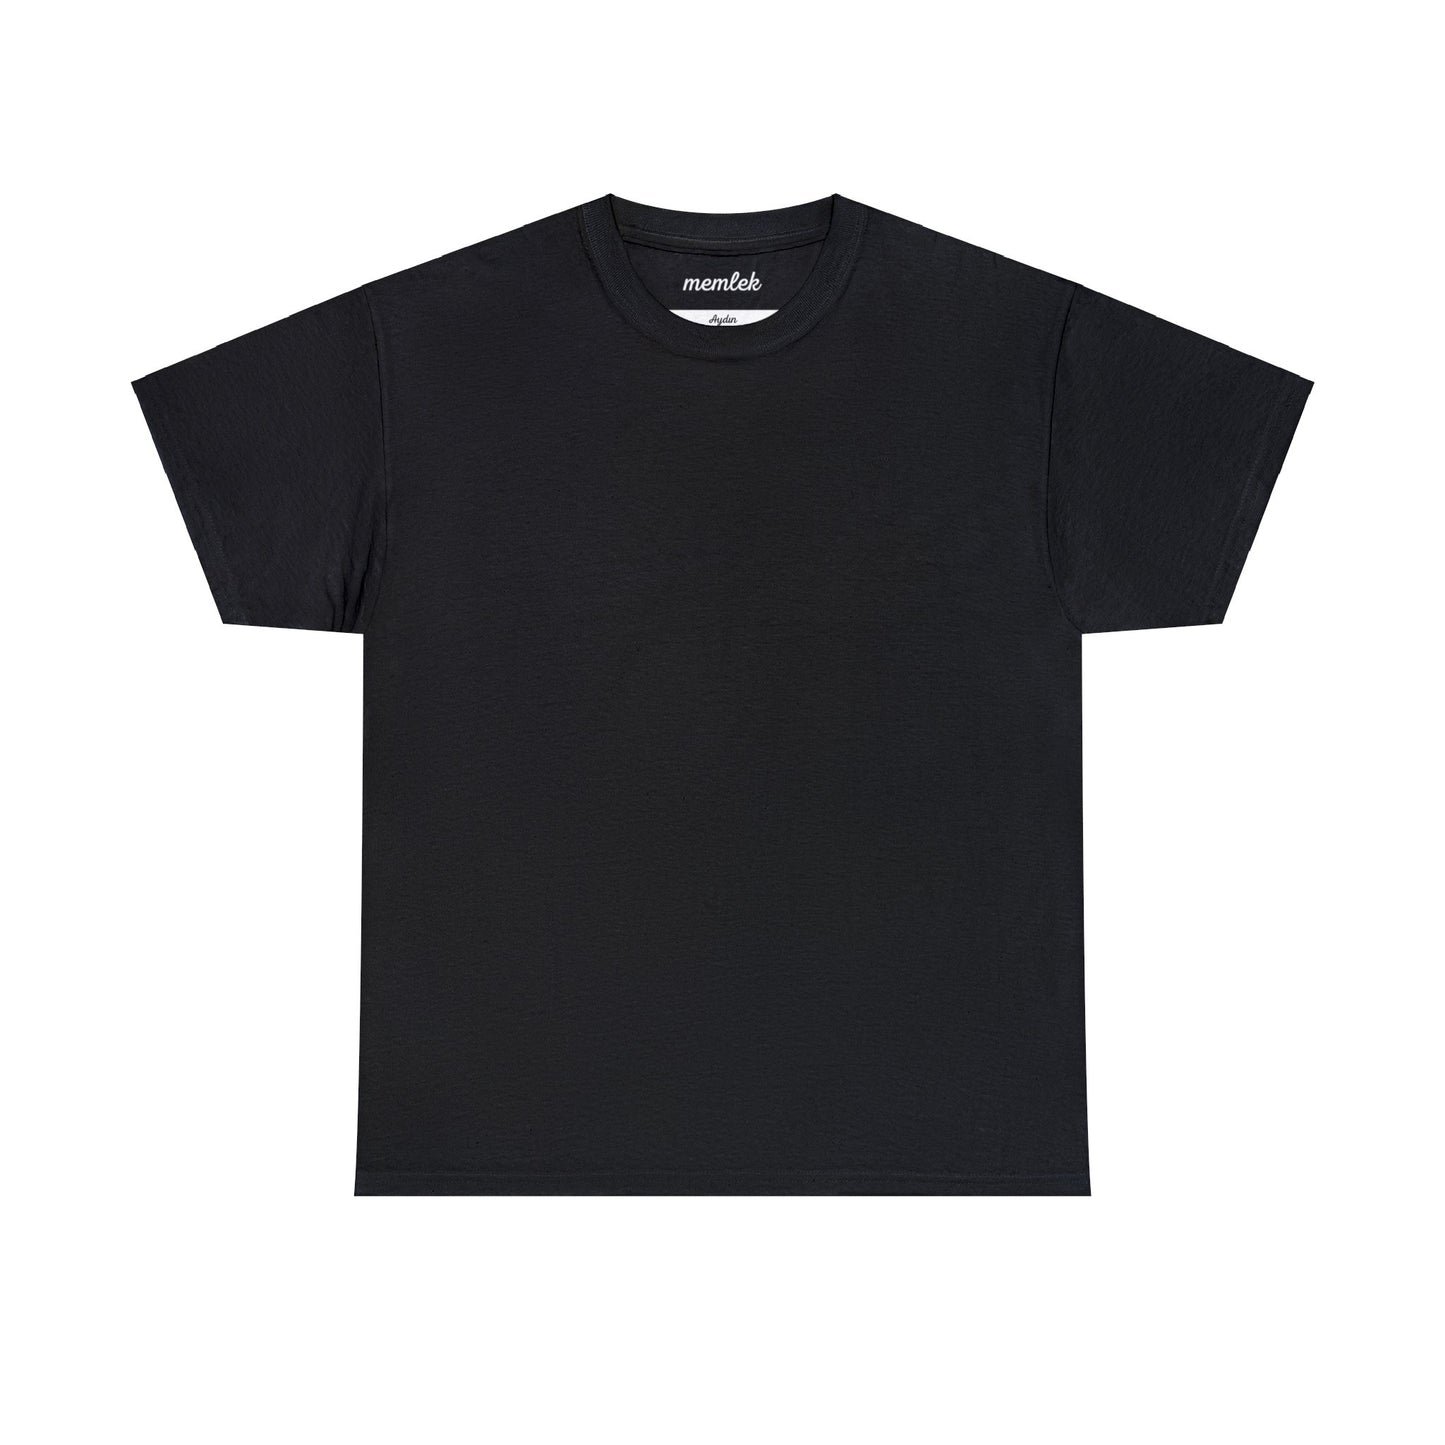 Kurt - 09 Aydın - T-Shirt - Back Print - Black/White